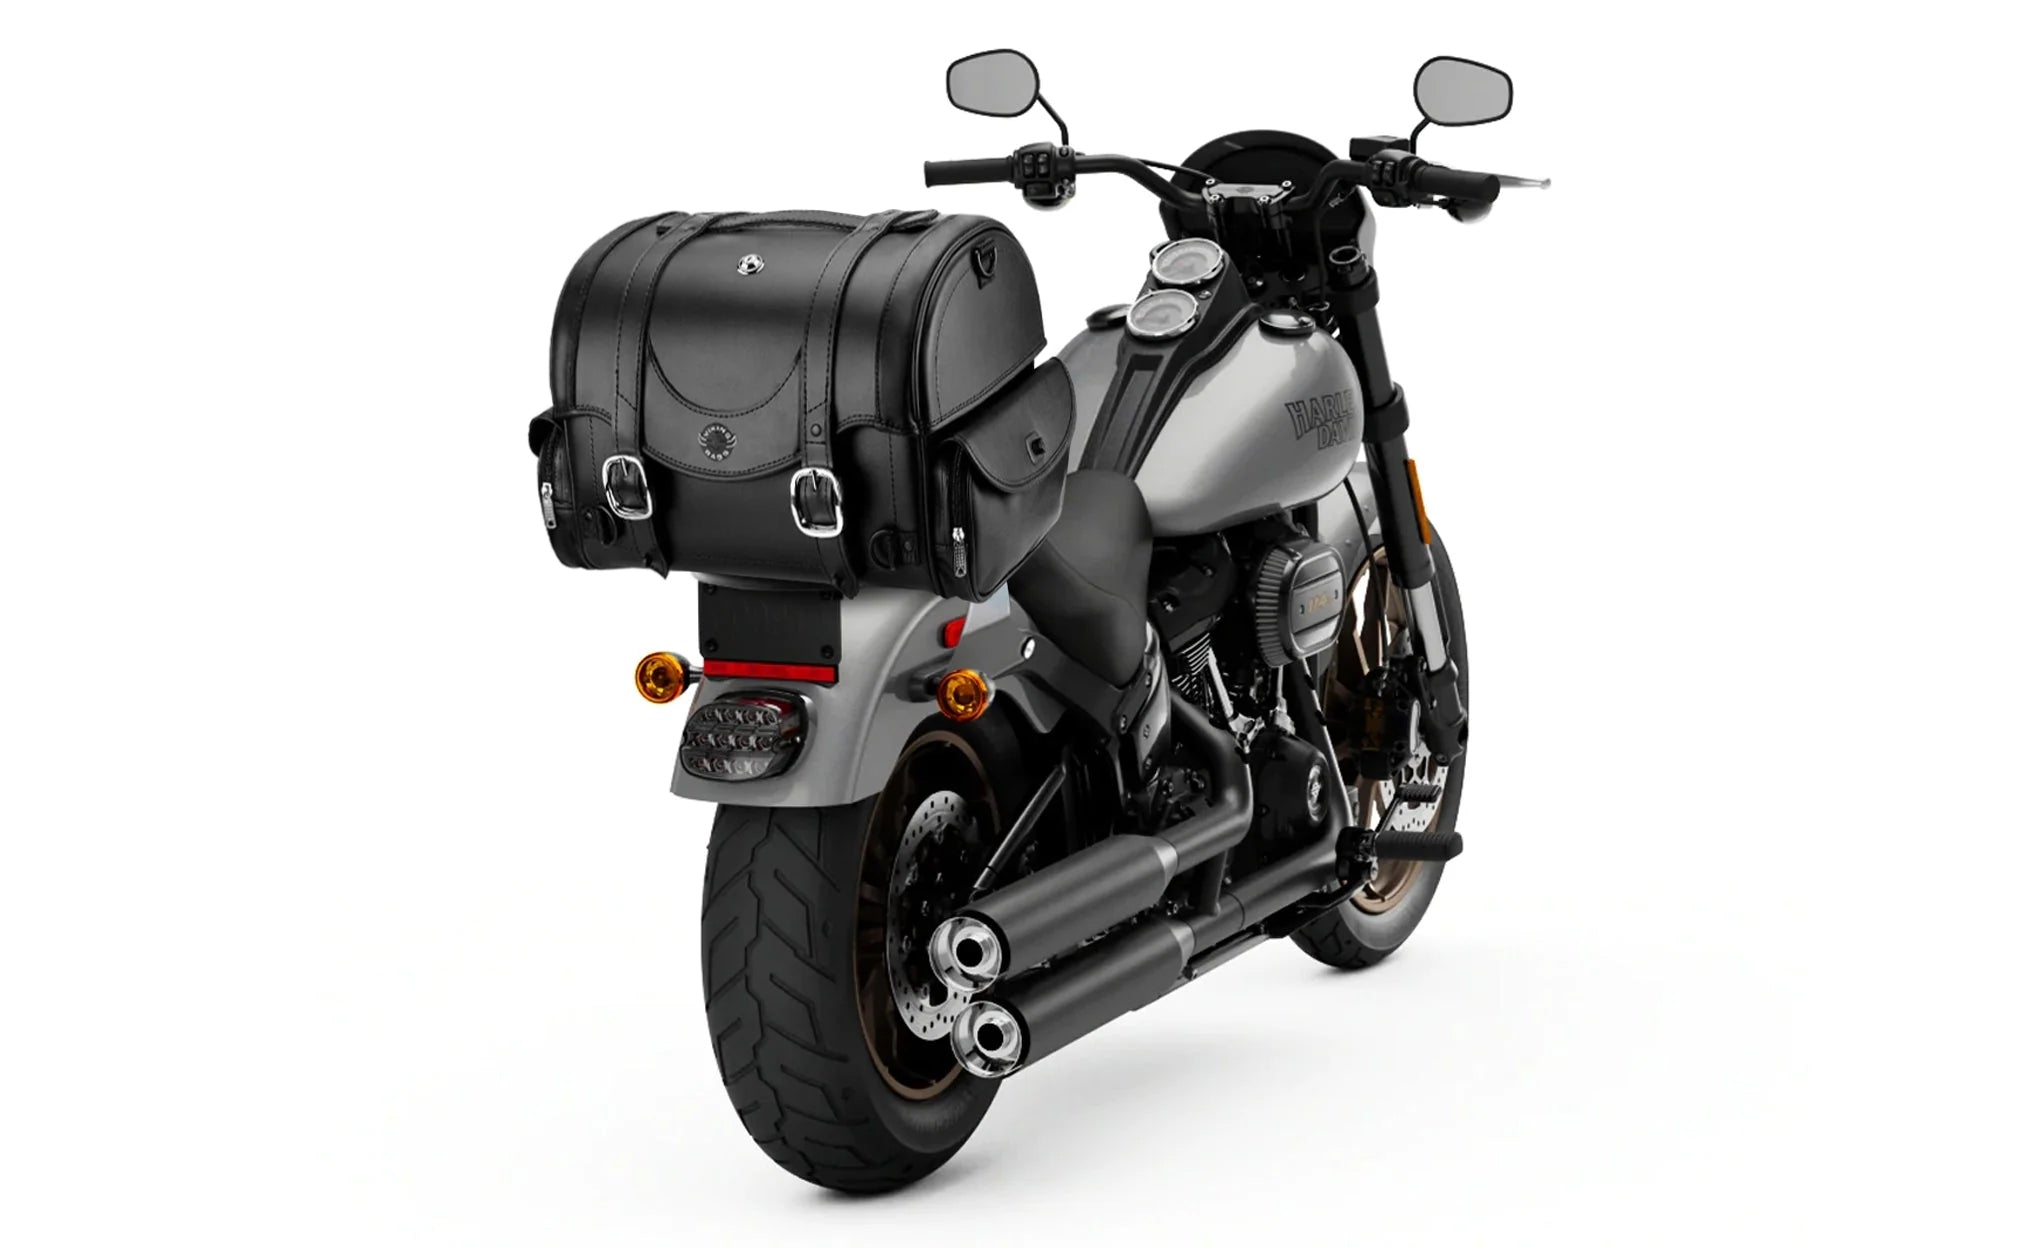 21L - Century Medium Suzuki Leather Motorcycle Roll Bag on Bike Photo @expand